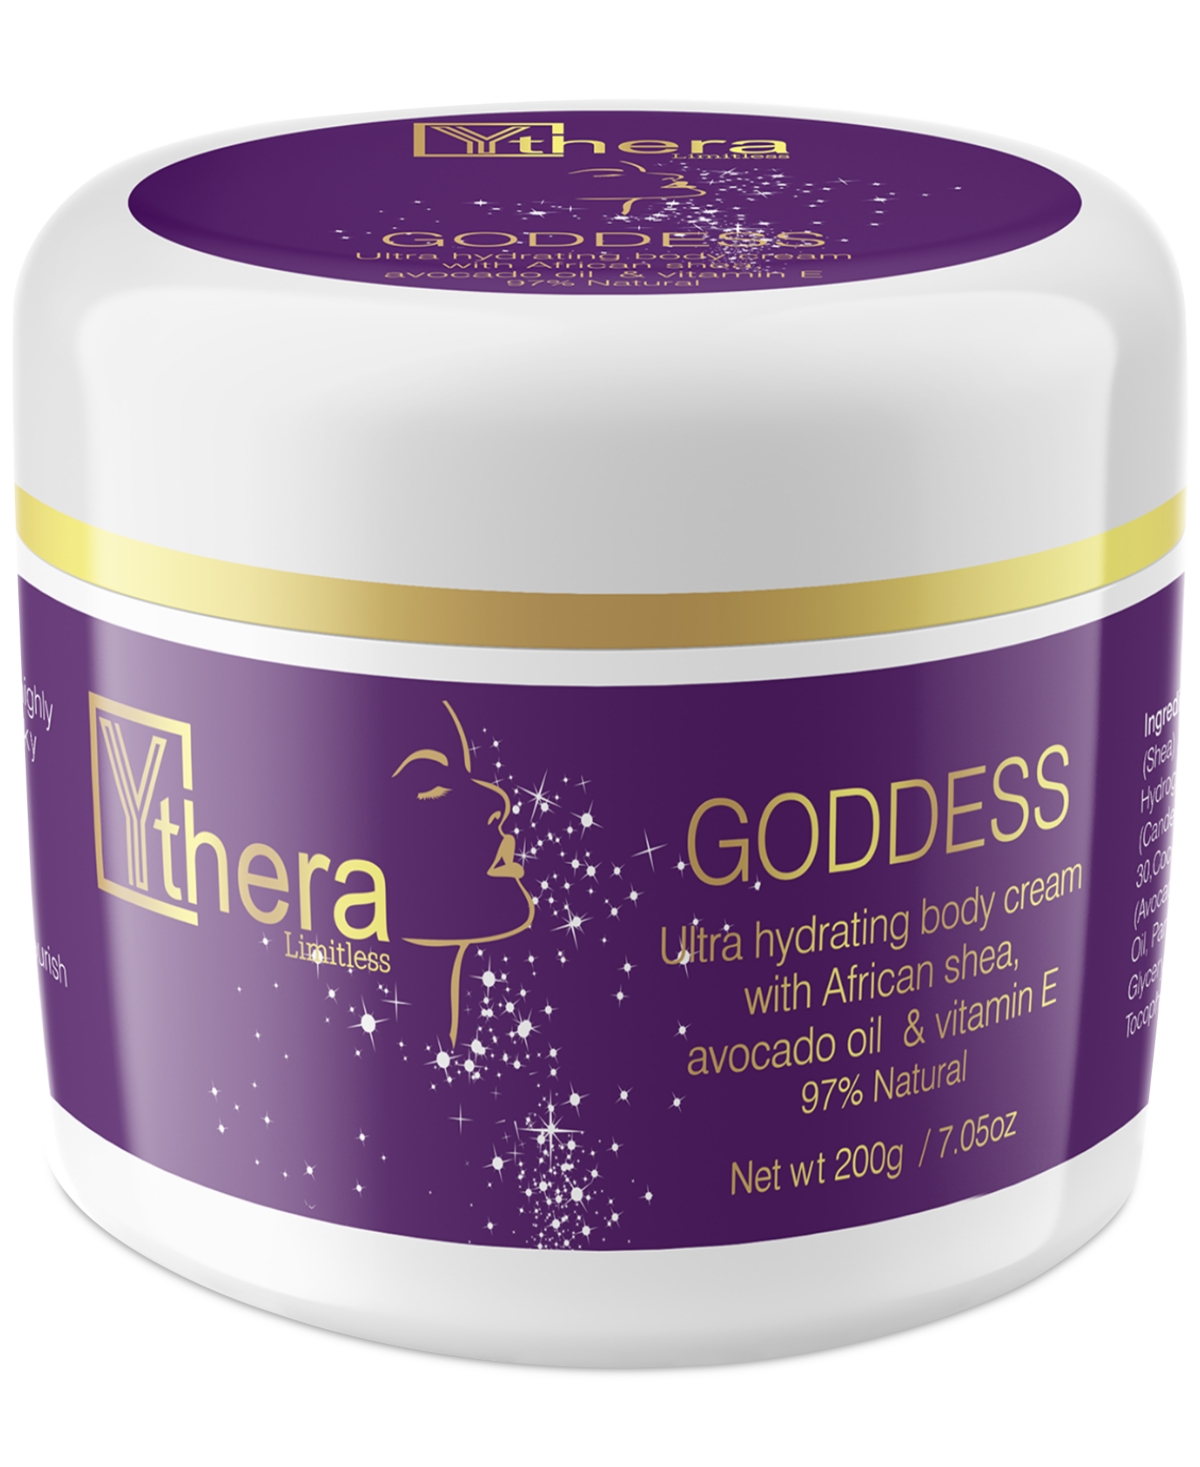 Goddess Ultra Hydrating Body Cream, 7.05 oz.